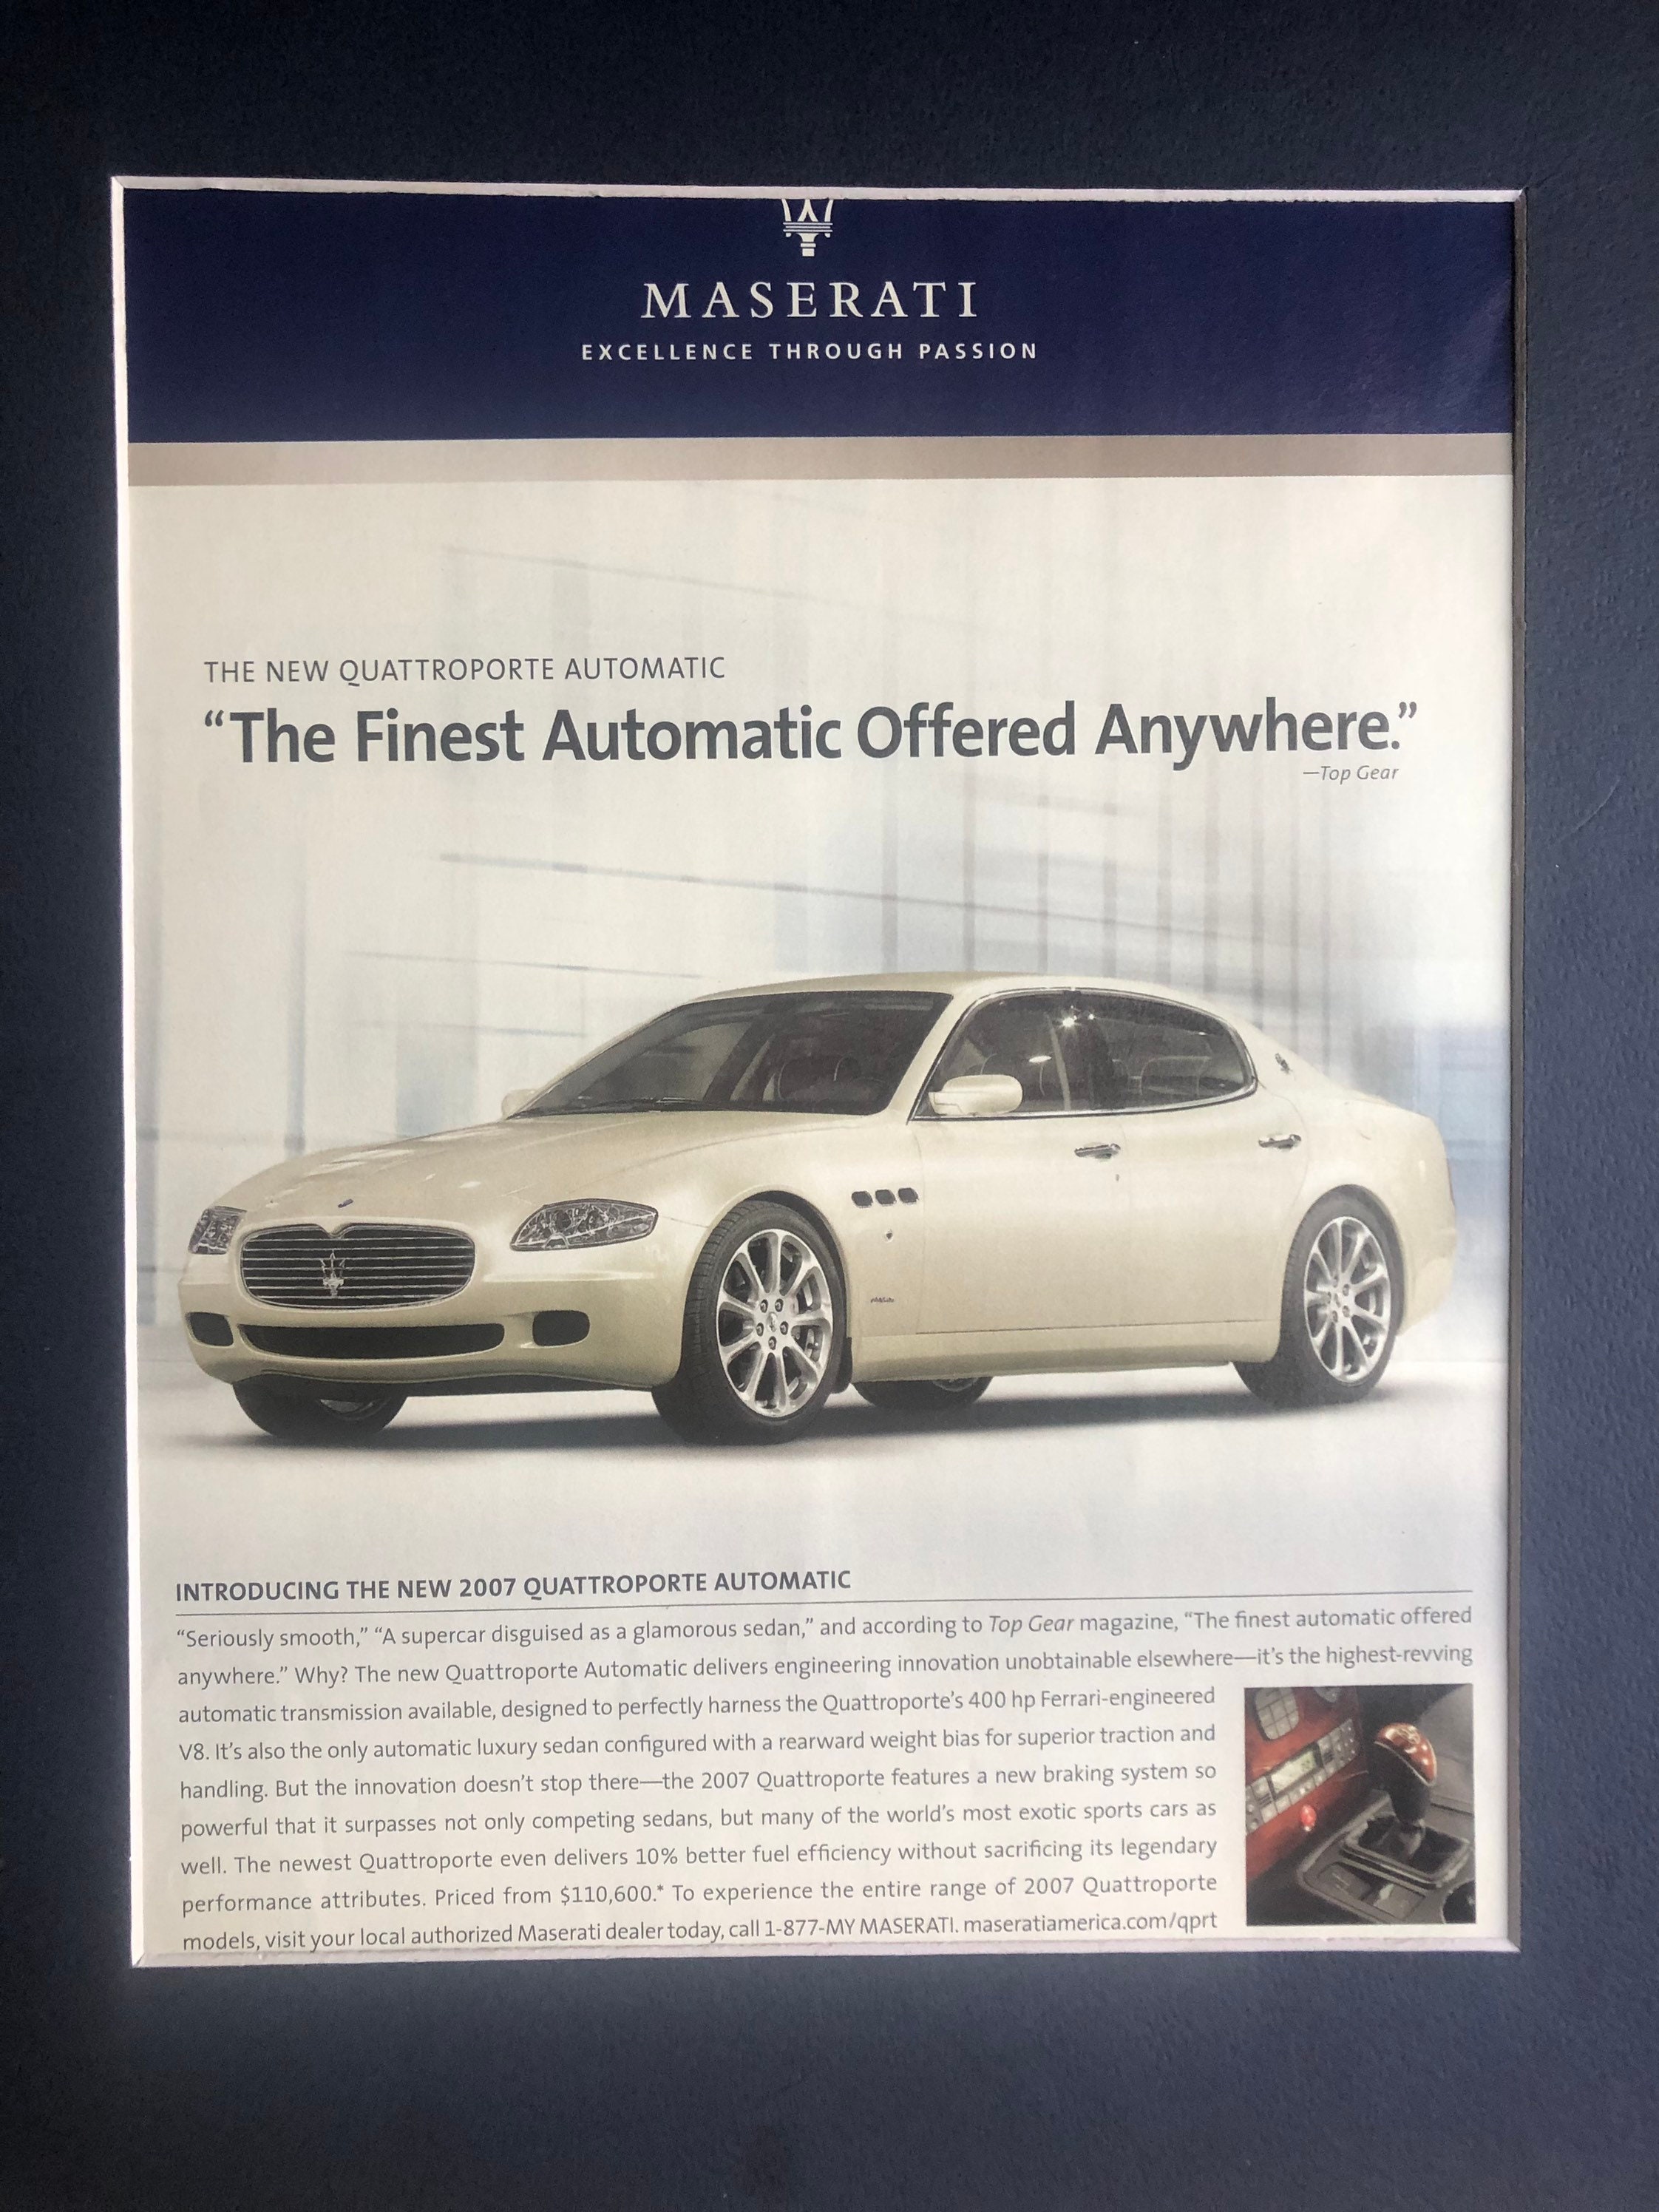 Silver Trident Pendant Earrings – Maseratistore